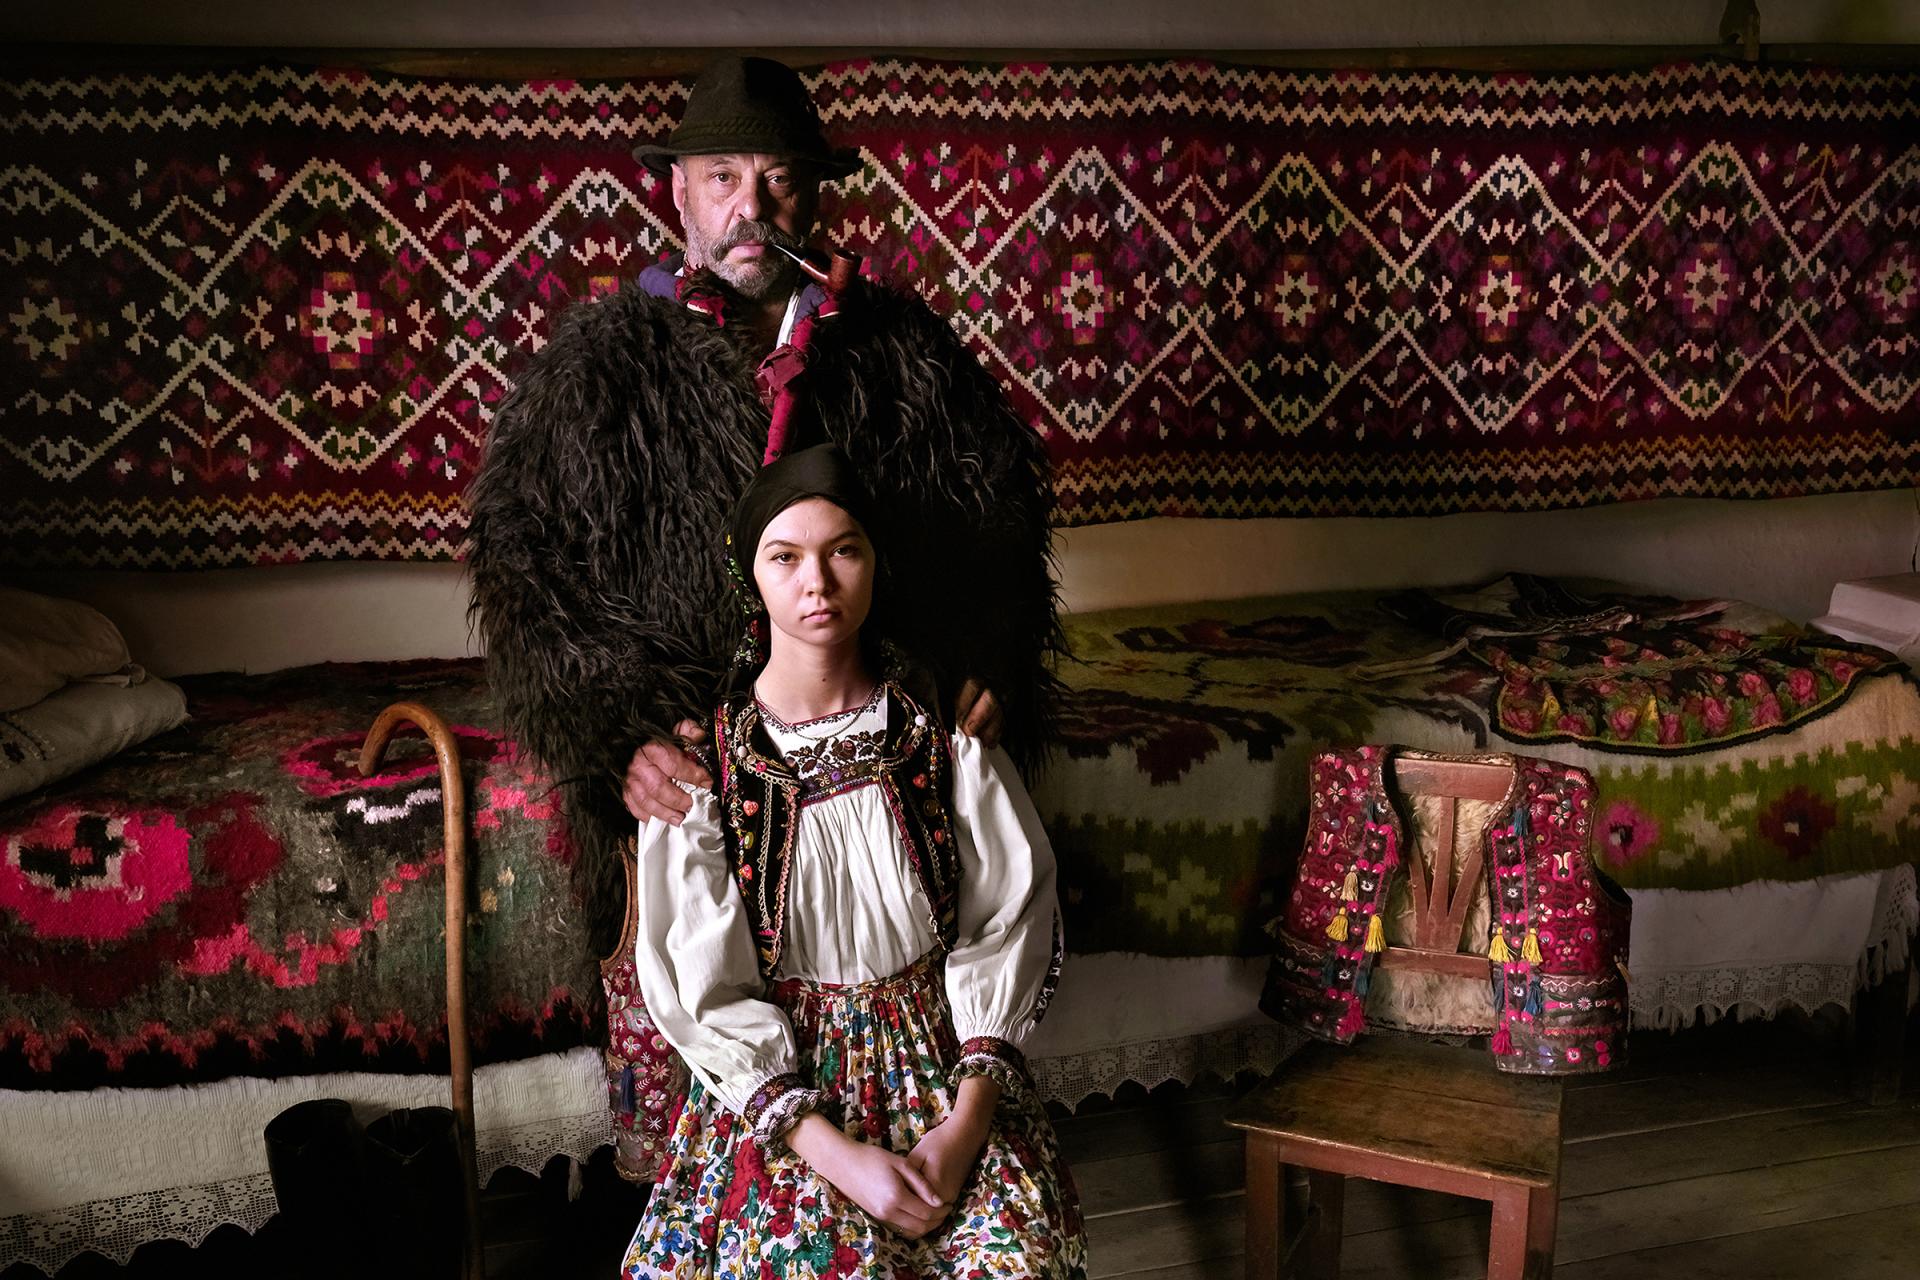 European Photography Awards Winner - Cultural ethnos of Transcarpathia, Ukraine.